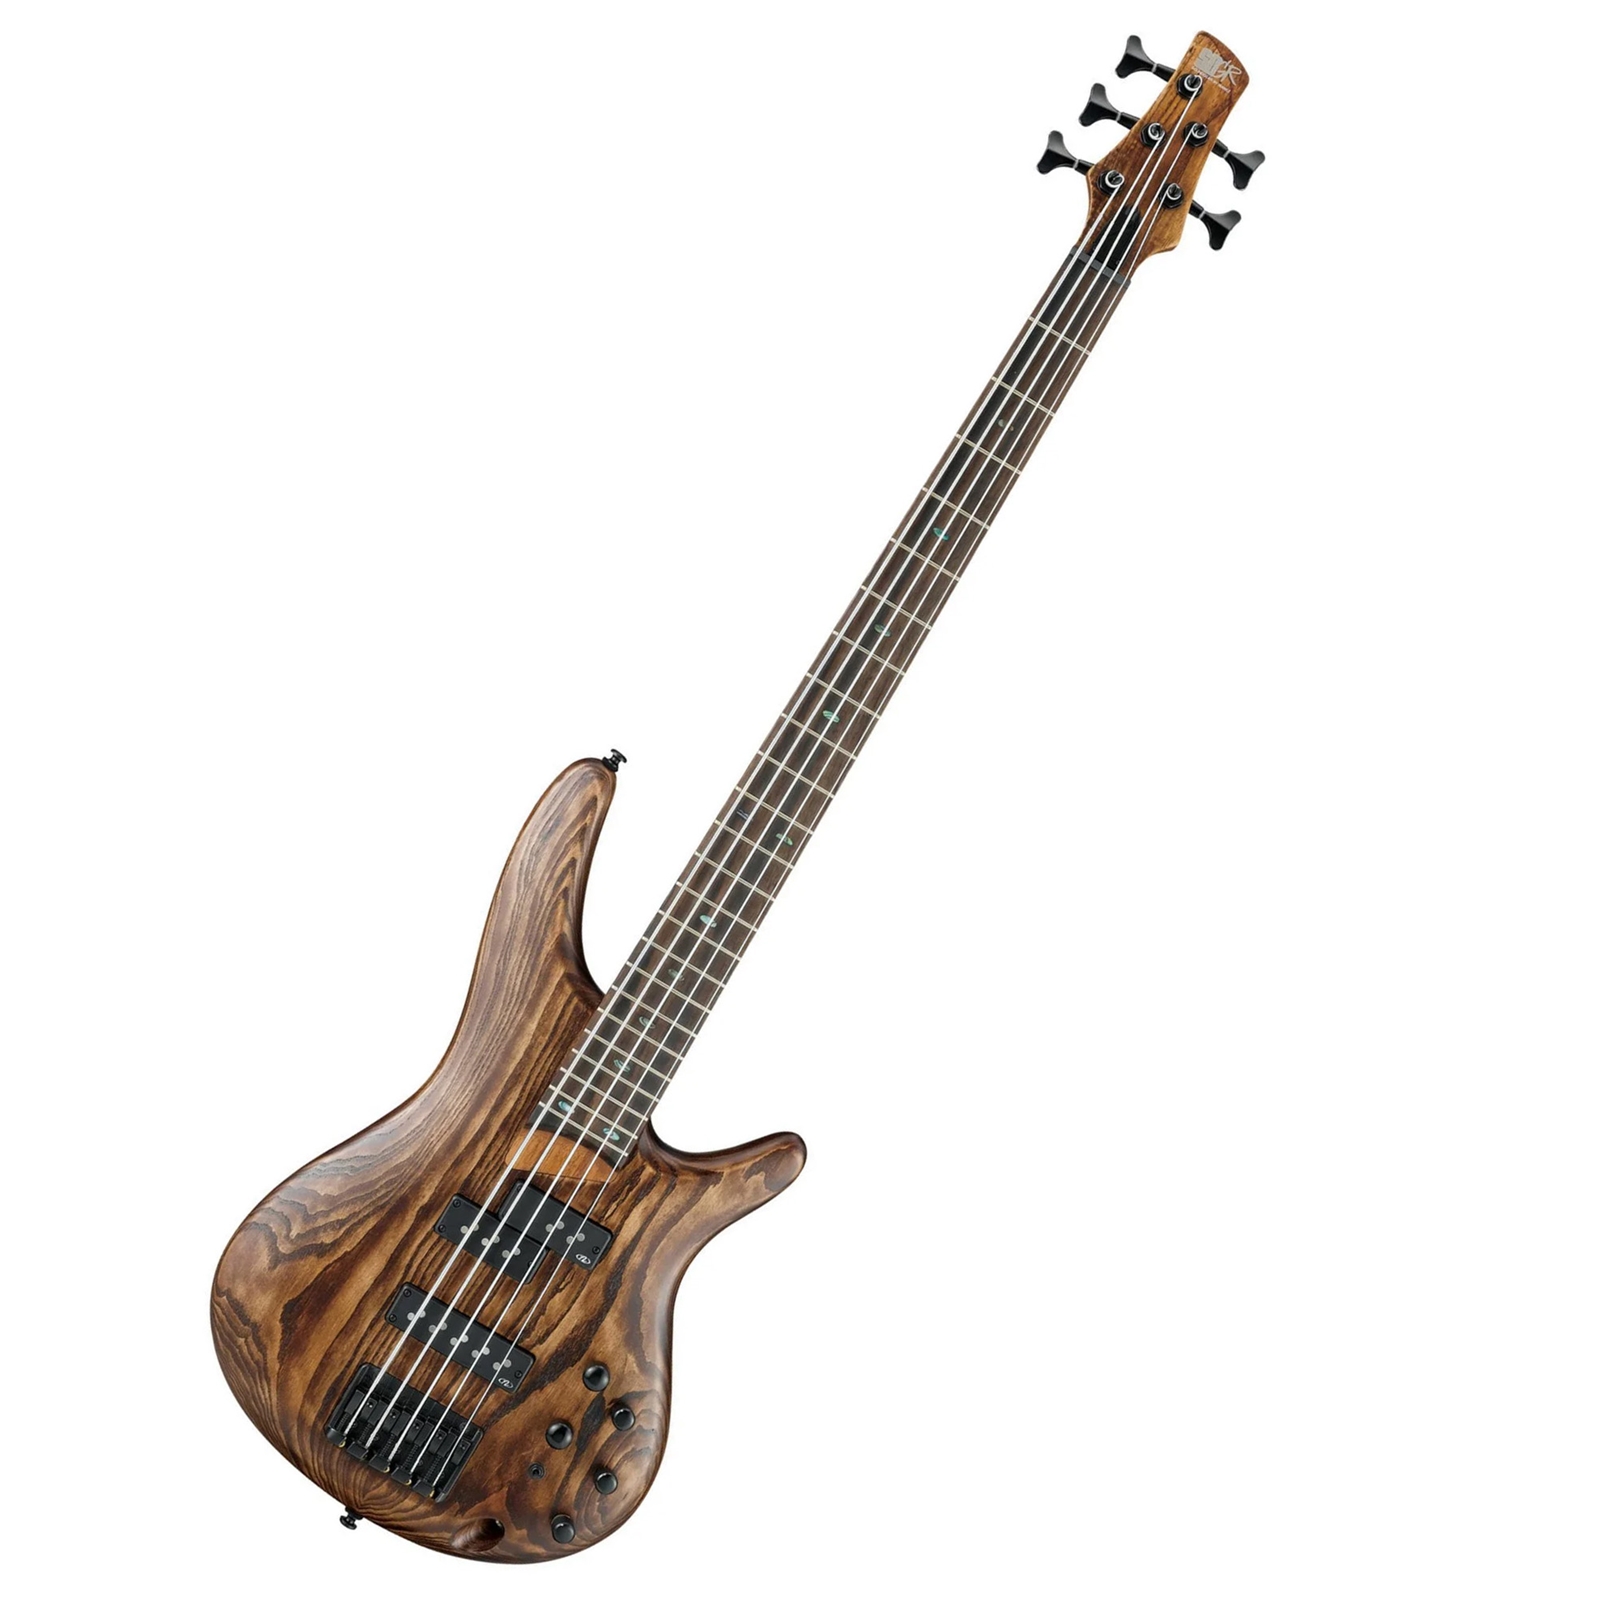 Ibanez SR655 Standard 5-String Electric Bass Guitar